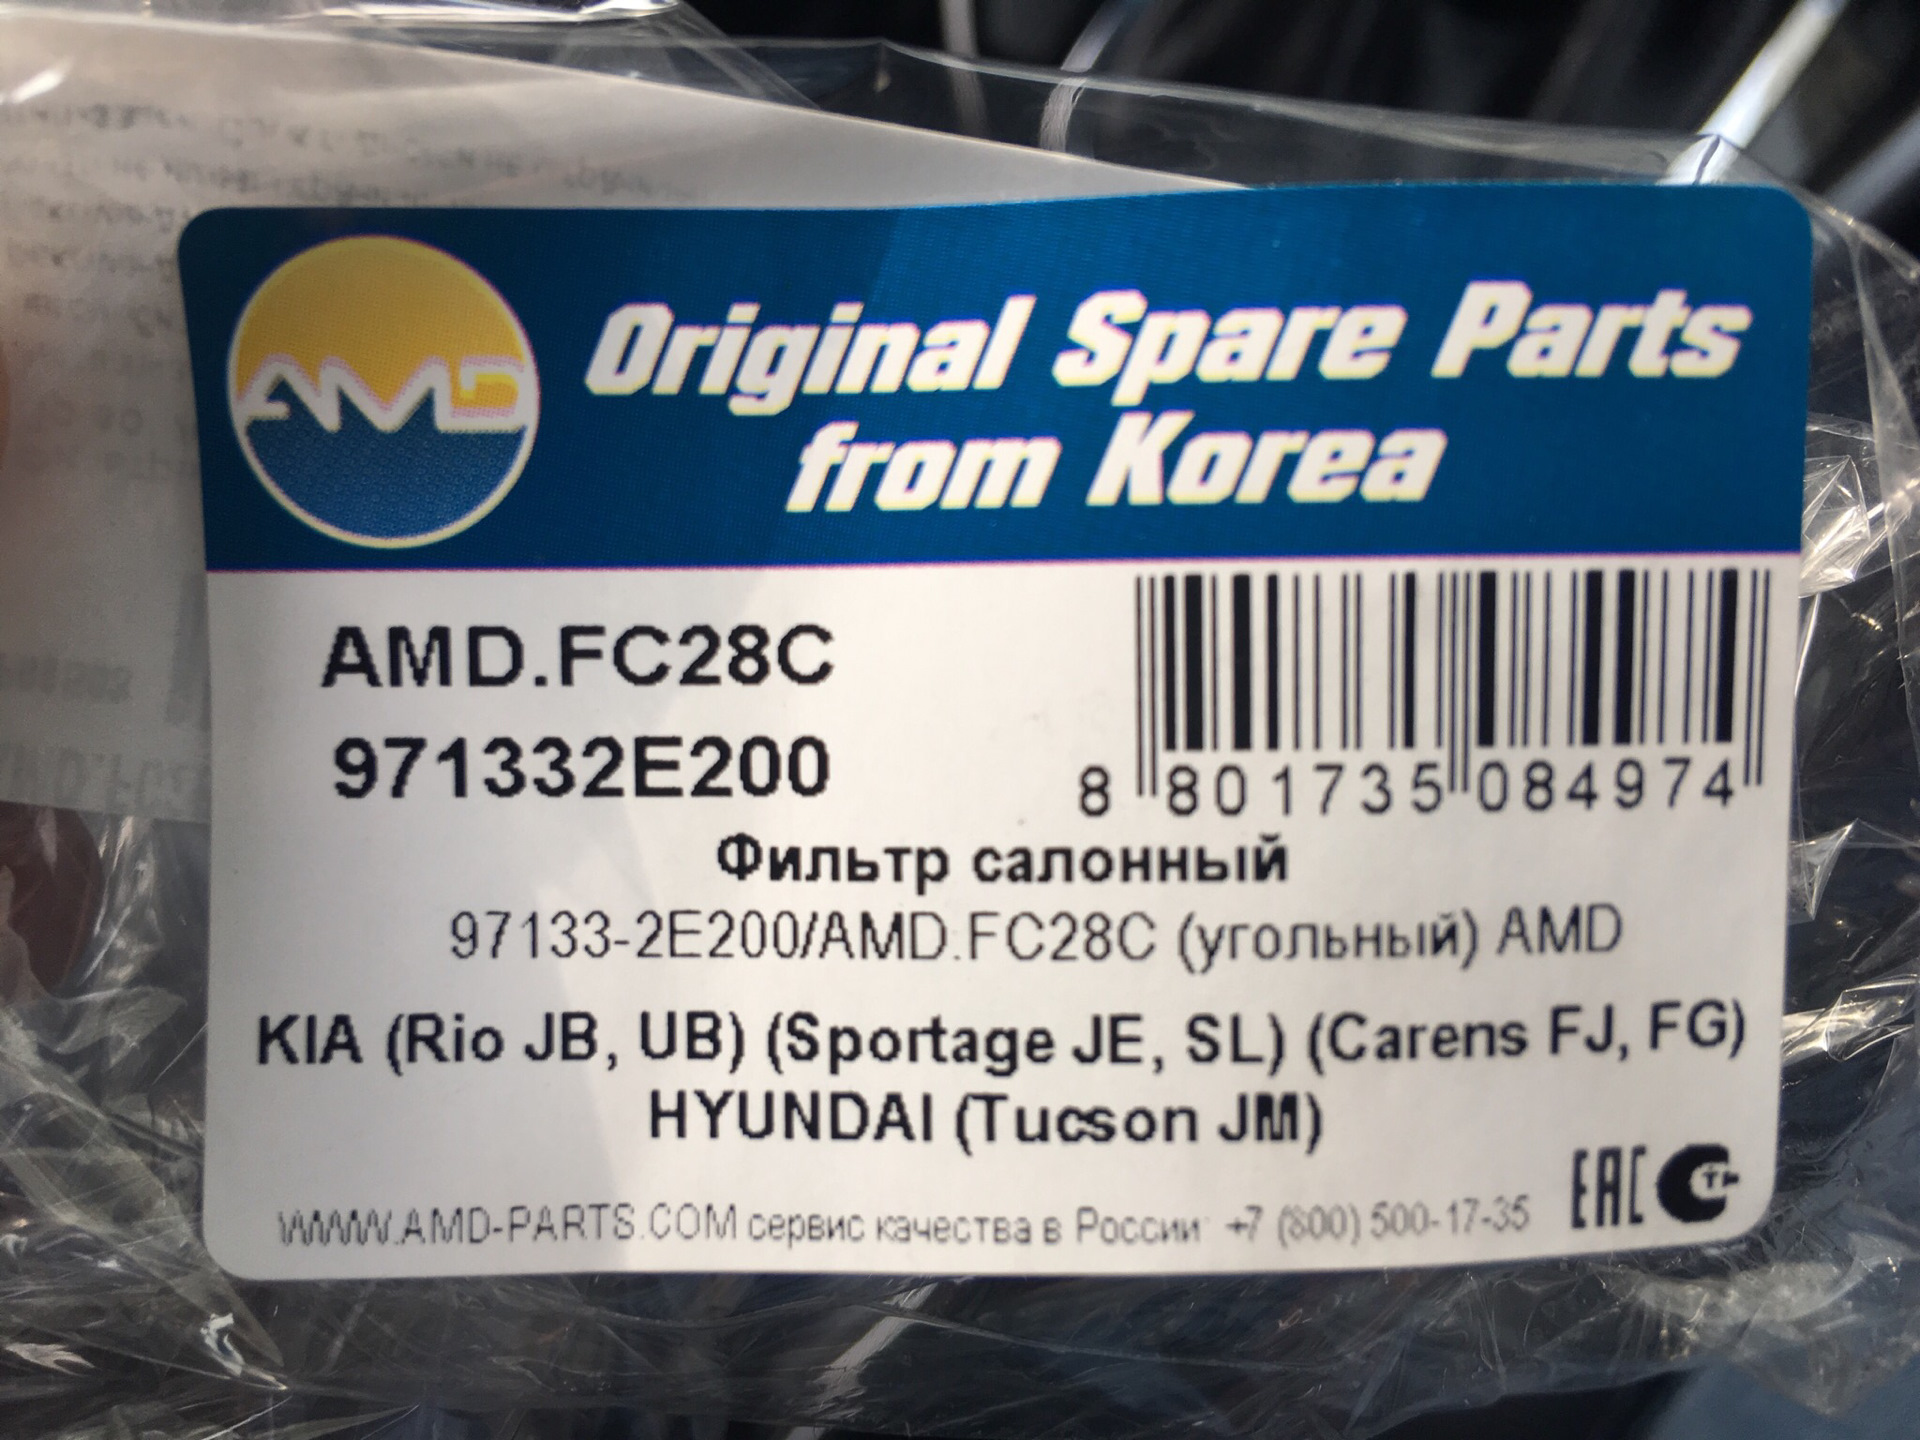 Spare parts list. Фильтр салонный Original spare Parts. AMD запчасти. Original spare Parts крышка бачка. AMD : AMD.fc28c.